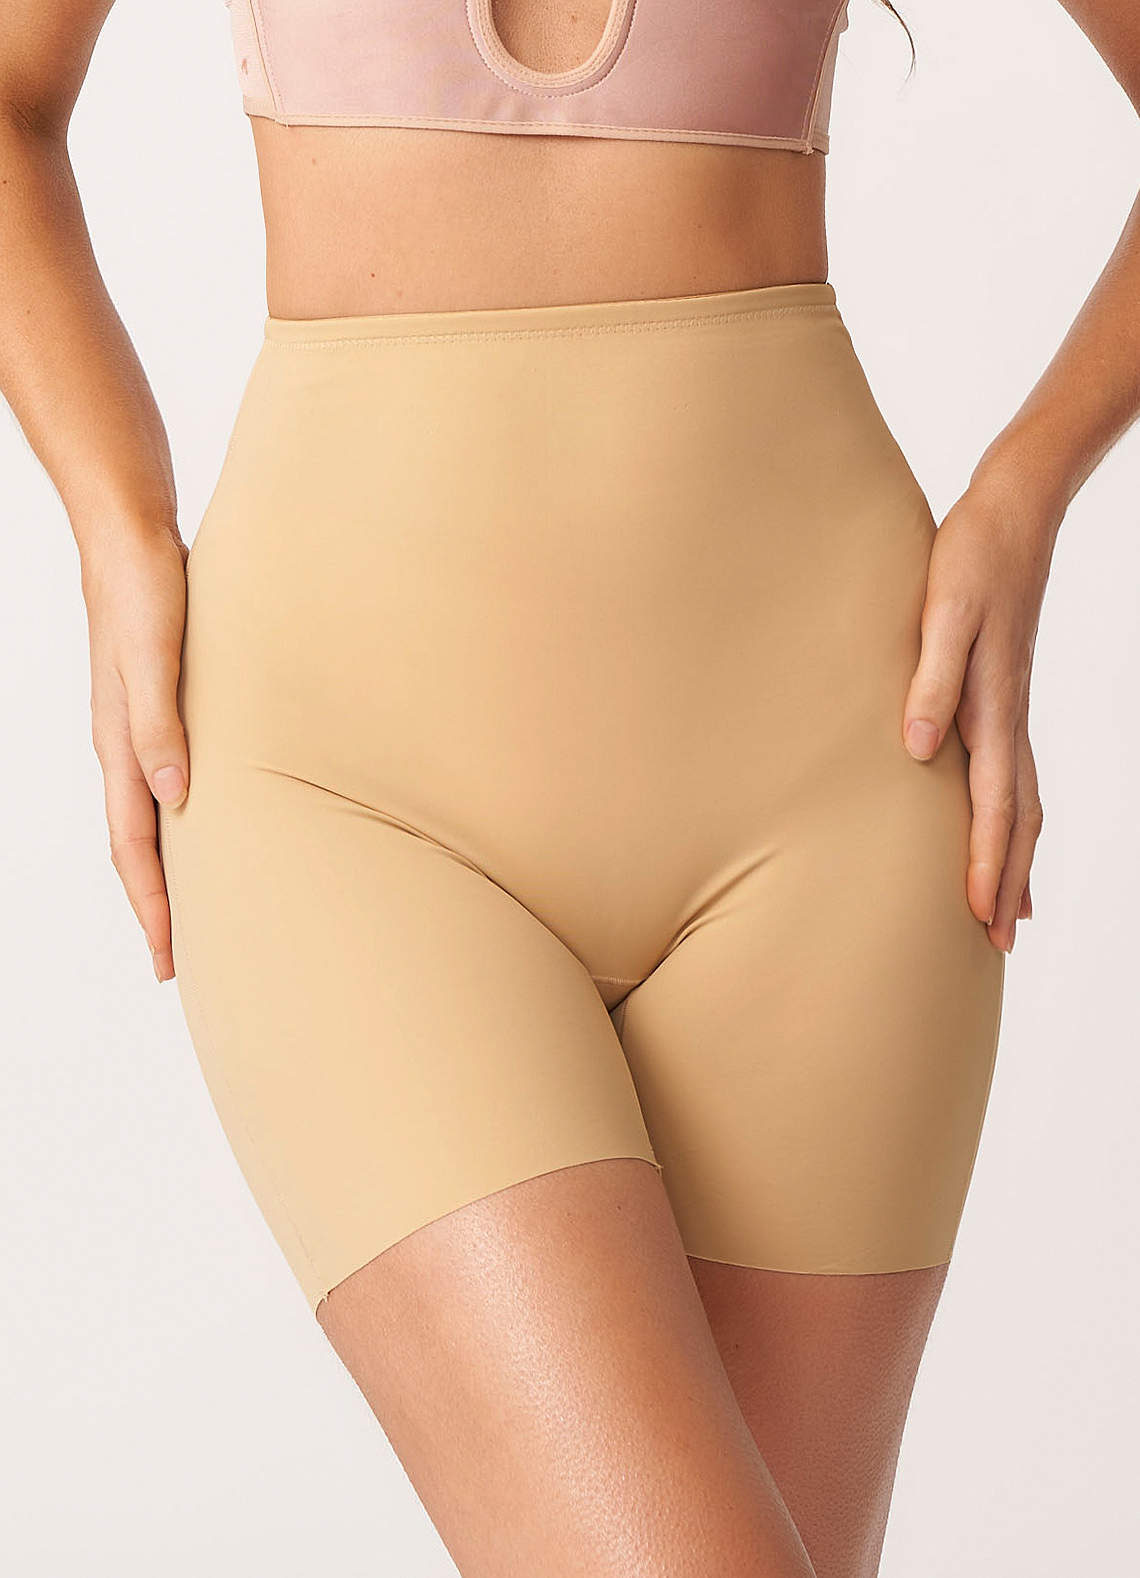 DoLoveY Women Tummy Control Shorts High Waist Thigh Slimmer